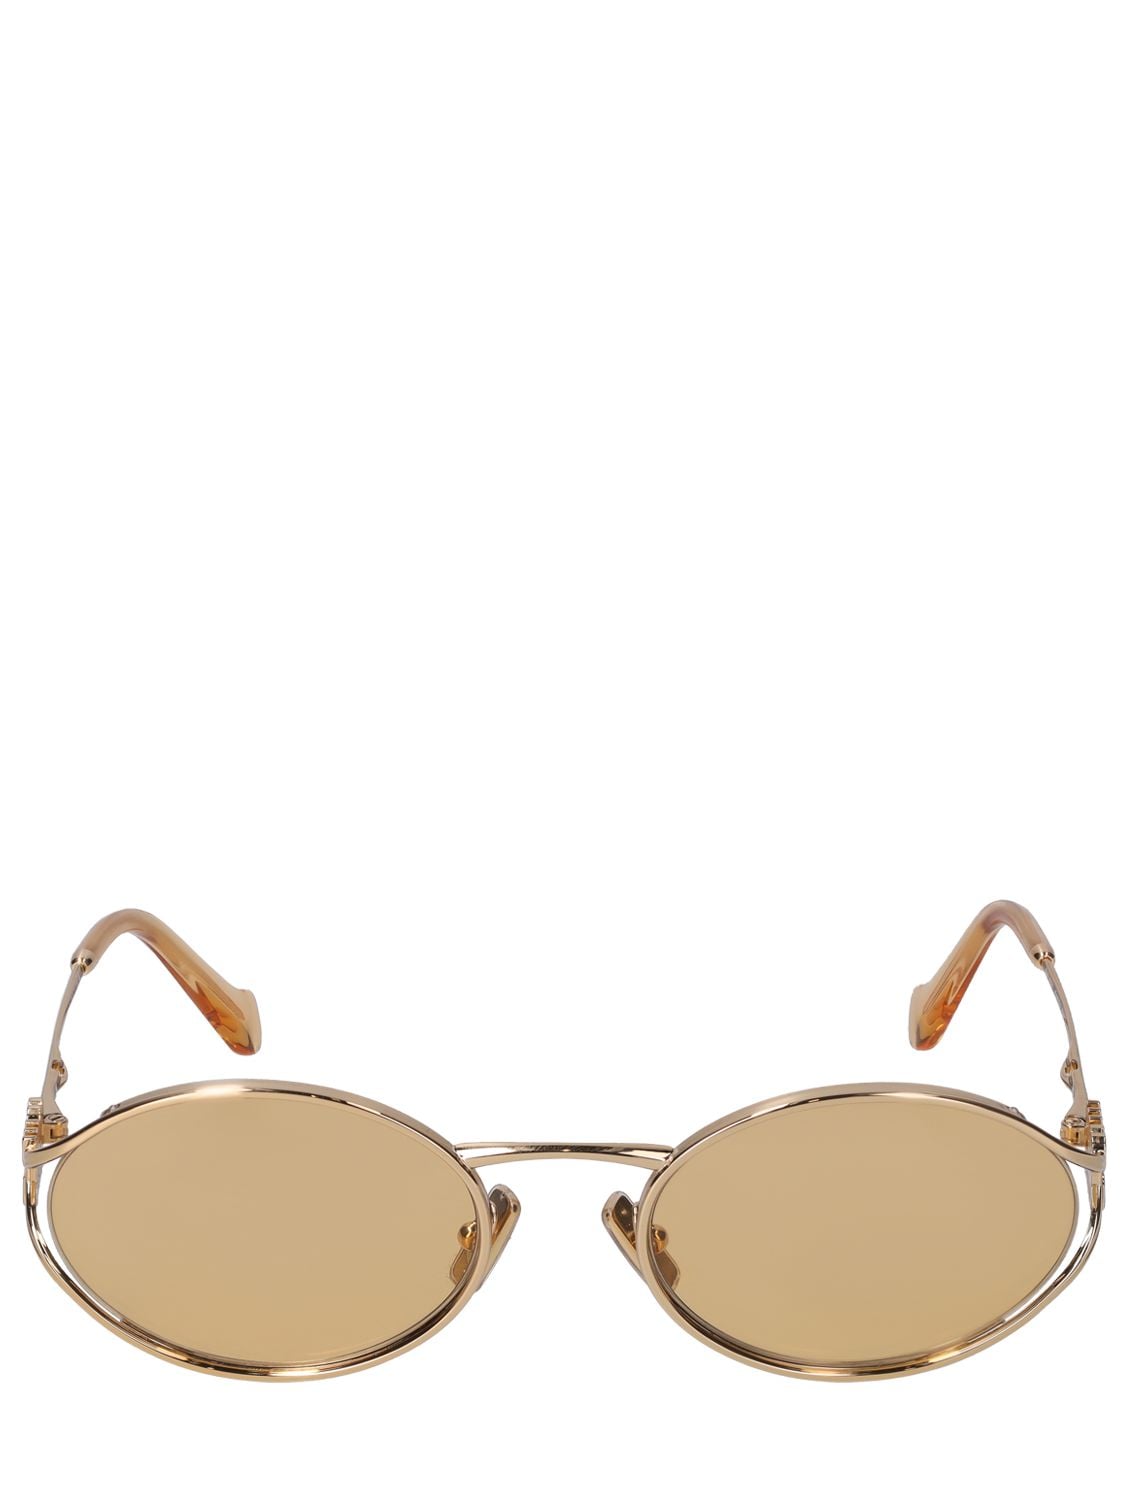 Image of Oval Metal Sunglasses